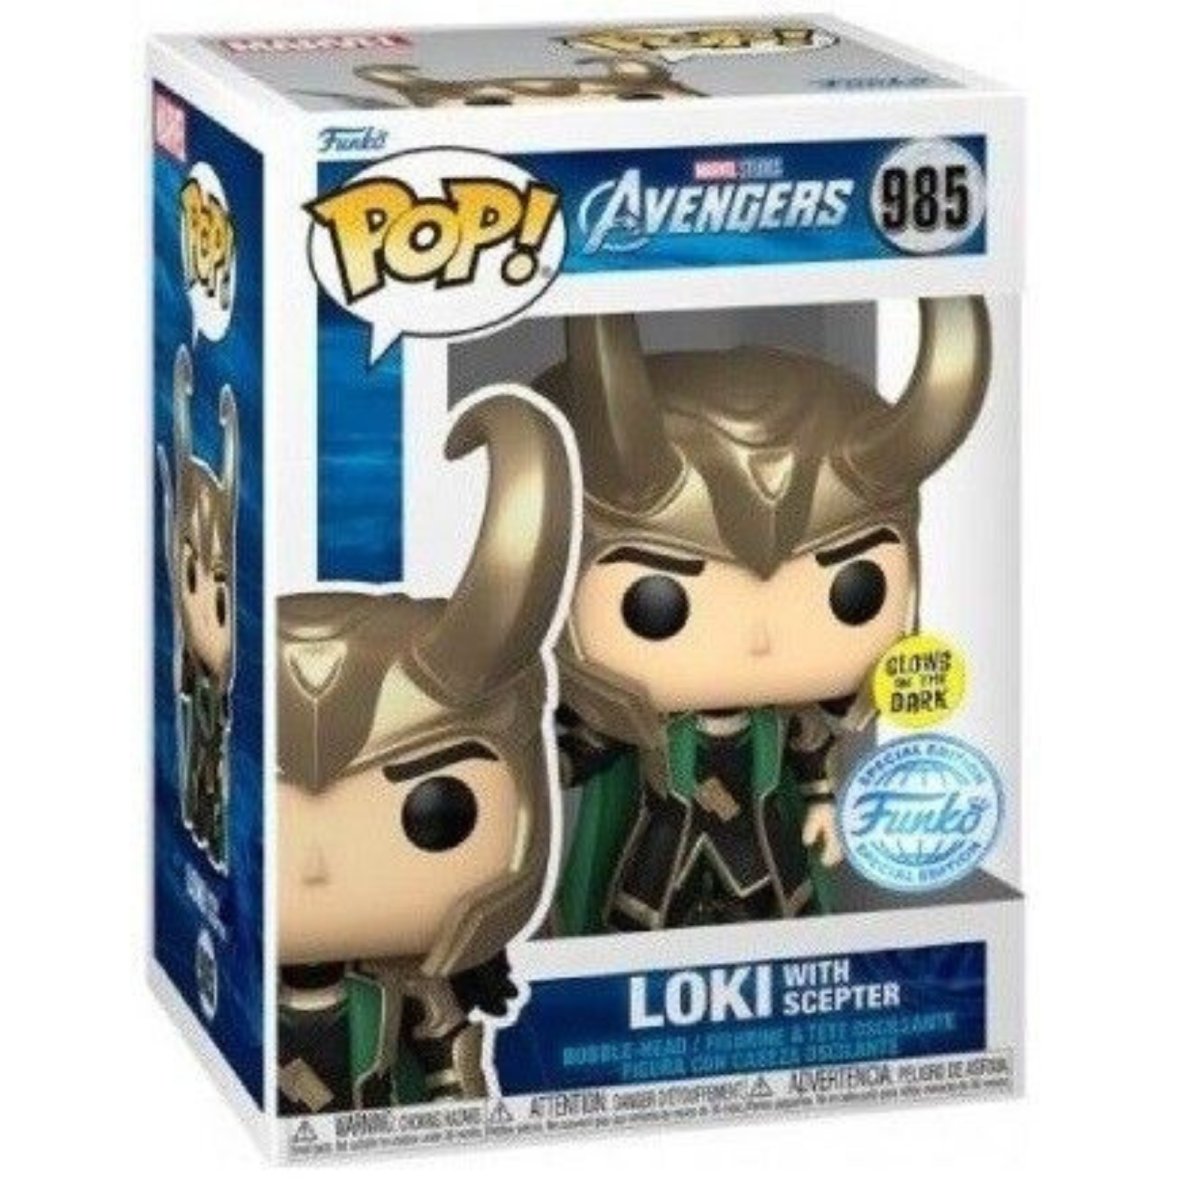 Avengers - Loki with Scepter (GITD Special Edition) #985 - Funko Pop! Vinyl Marvel - Persona Toys